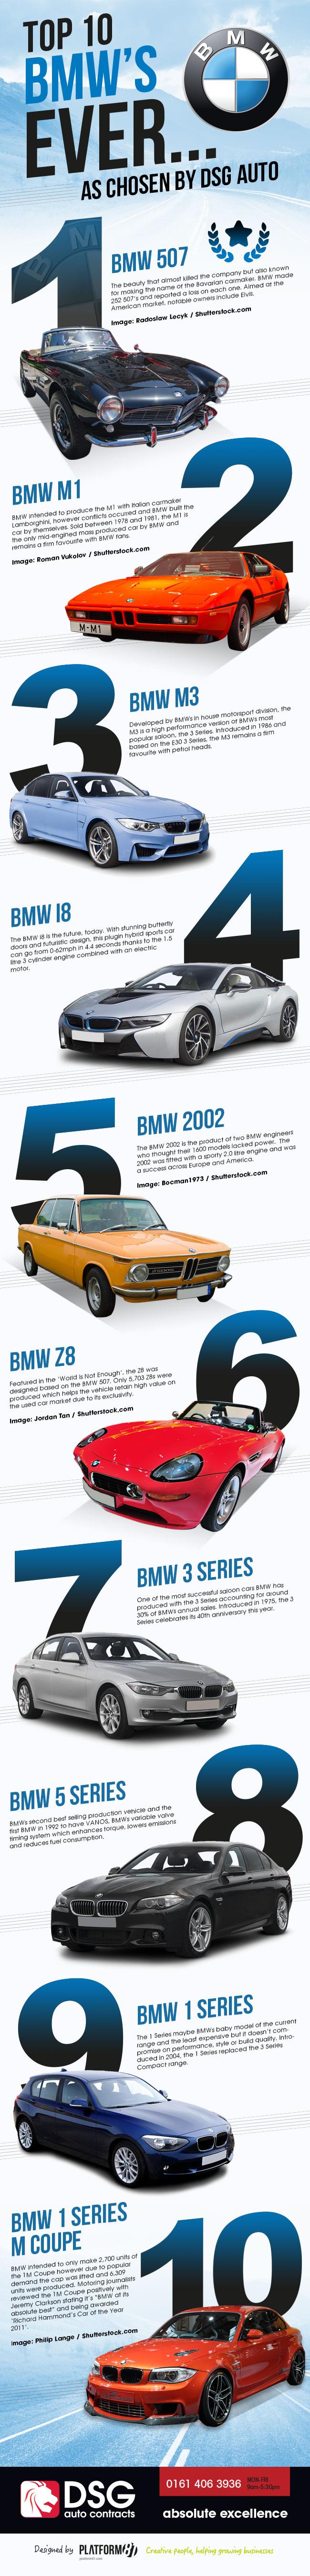 BMW Top 10 Cars